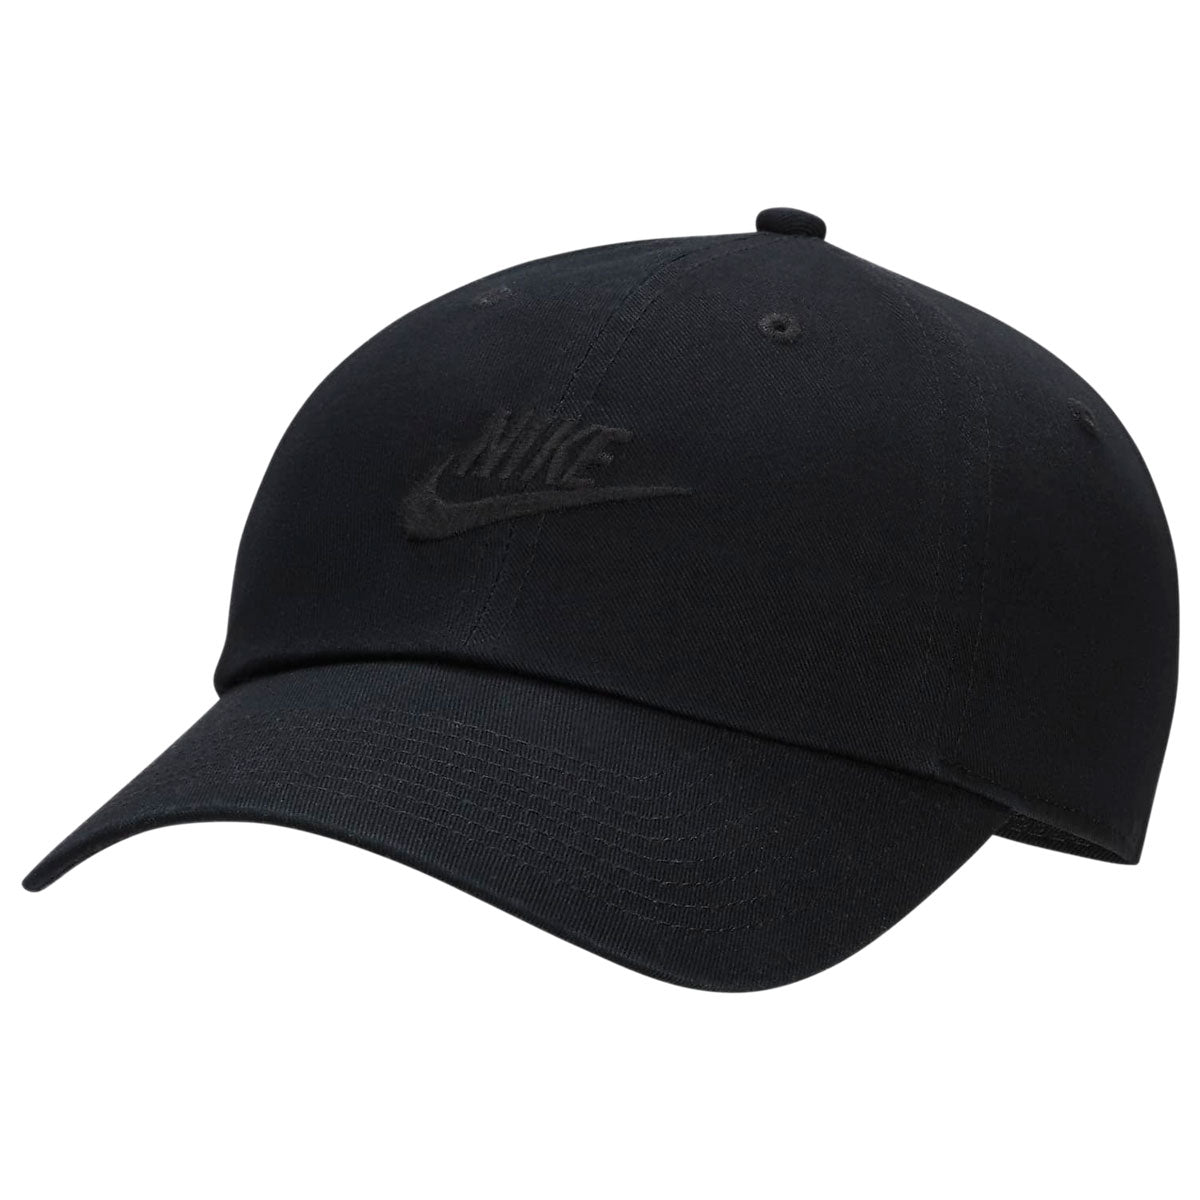 Nike SB Futbol Club Hat - Black/Black image 1